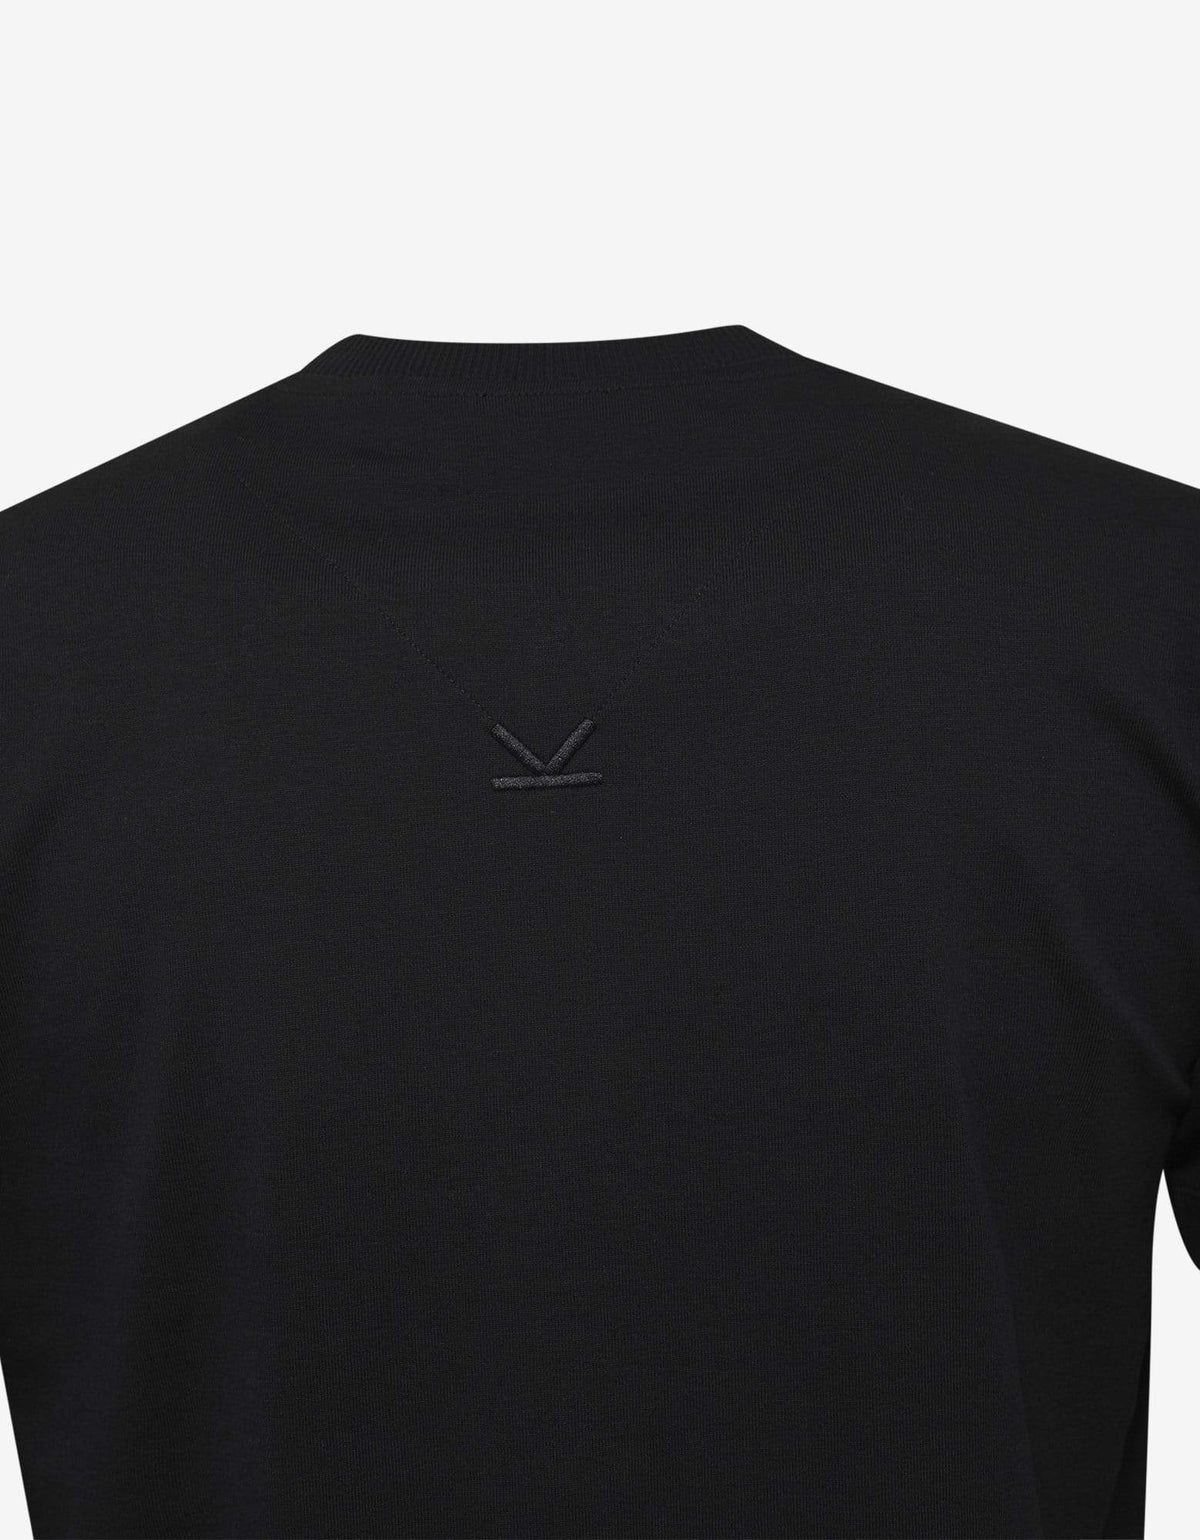 Kenzo Black Logo Embroidery T-Shirt